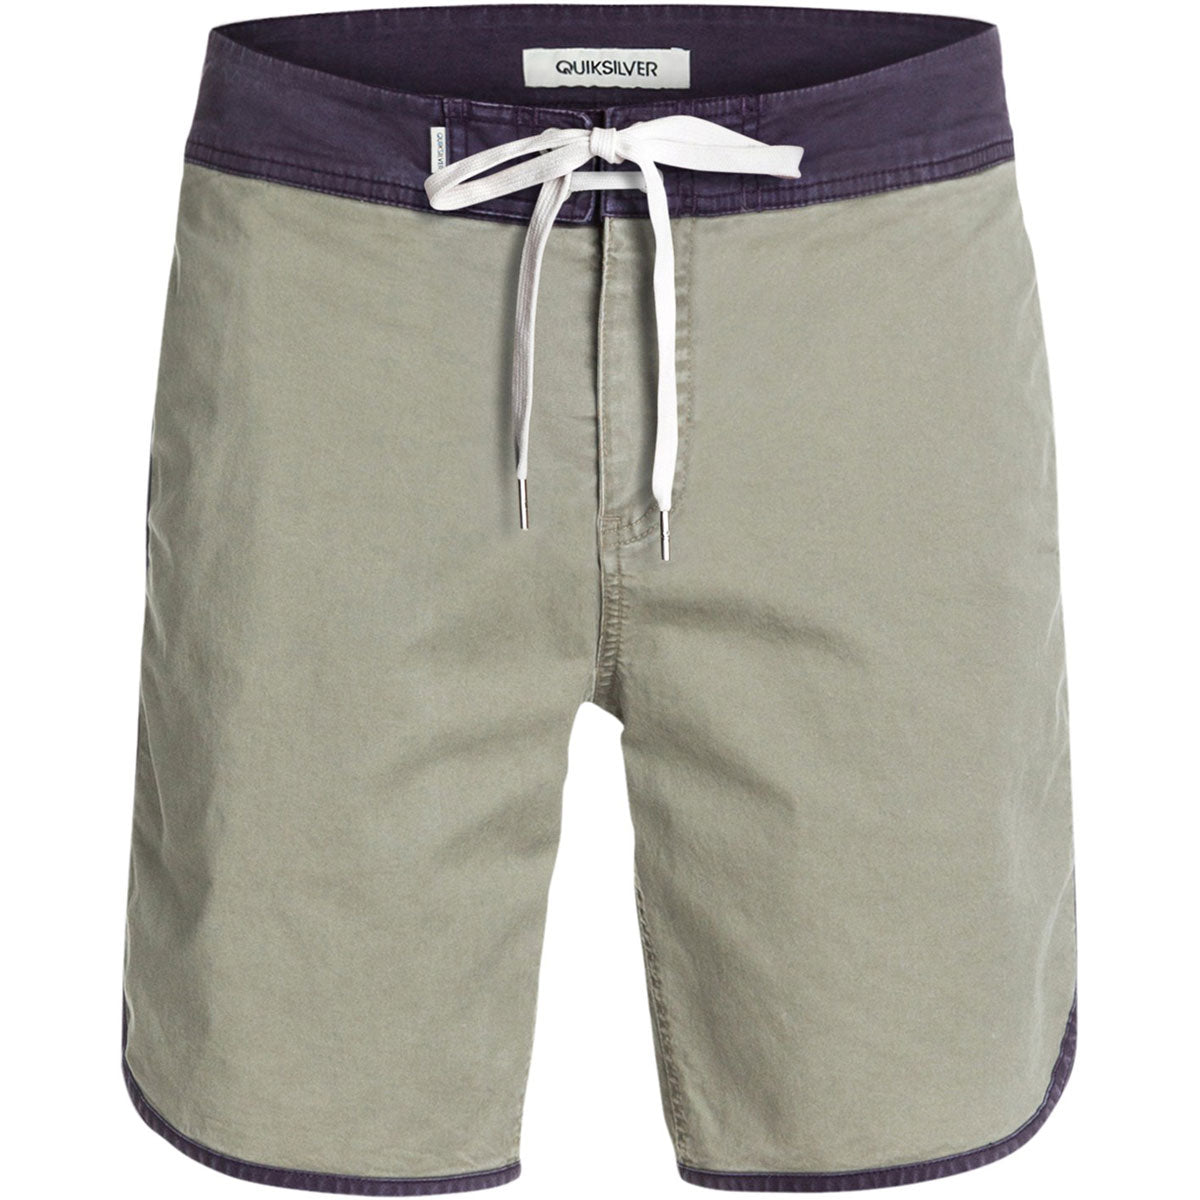 Quiksilver Street Trunks Men's Boardshort Shorts - Henna